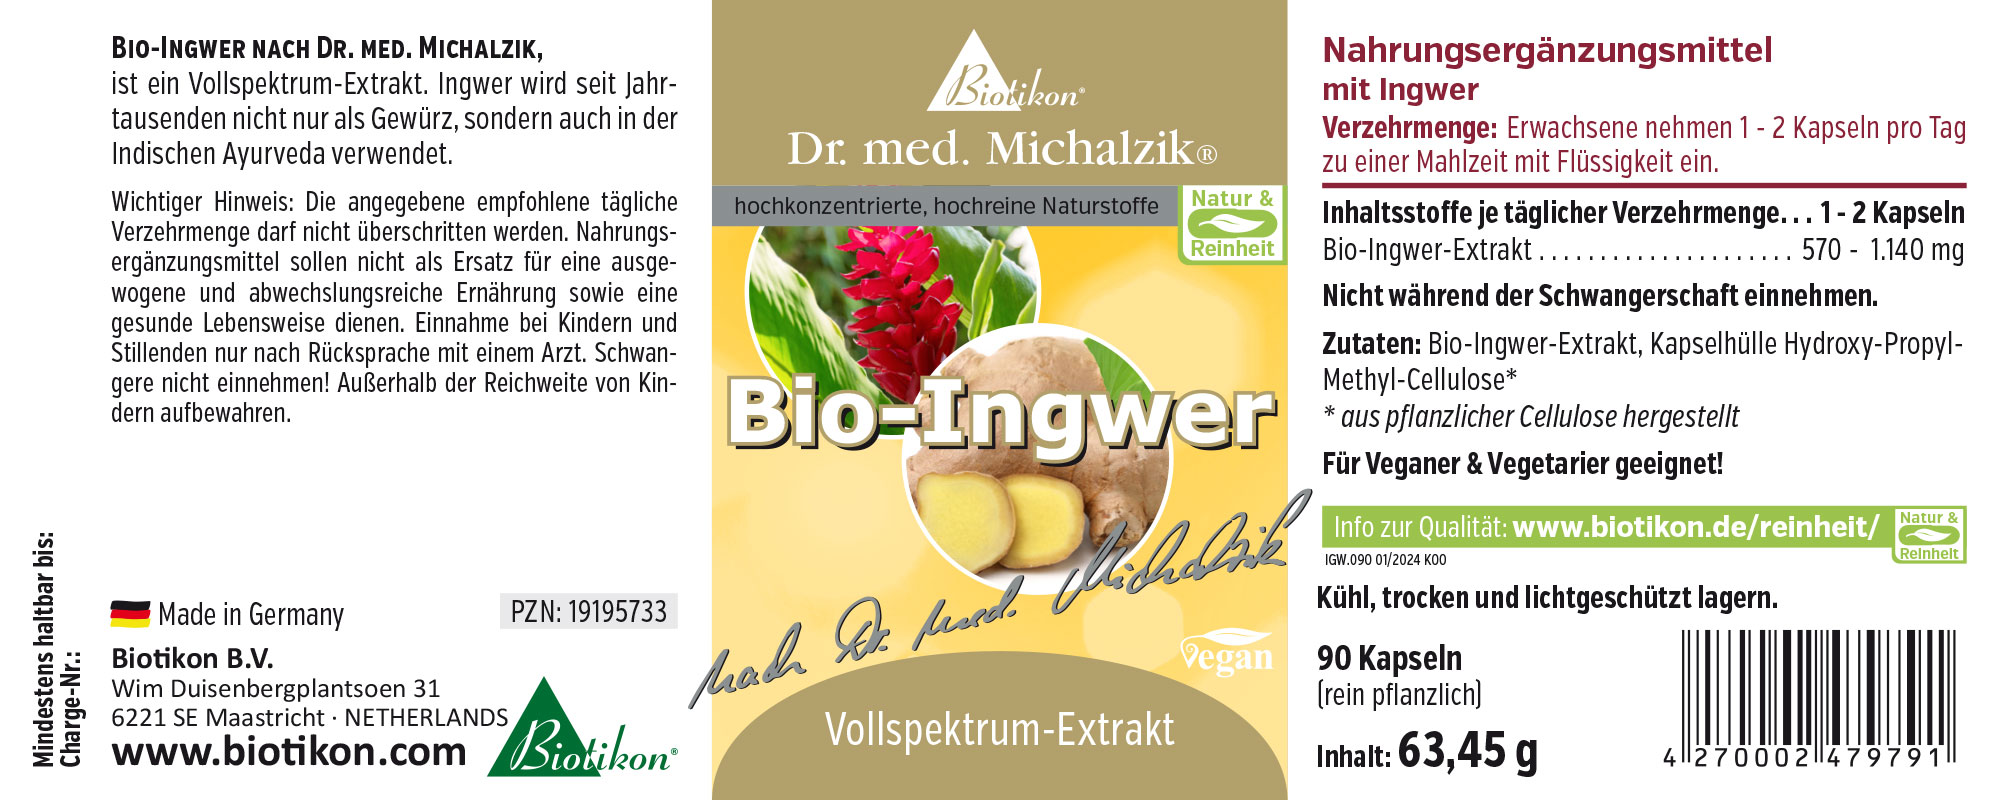 Bio-Ingwer nach Dr. med. Michalzik